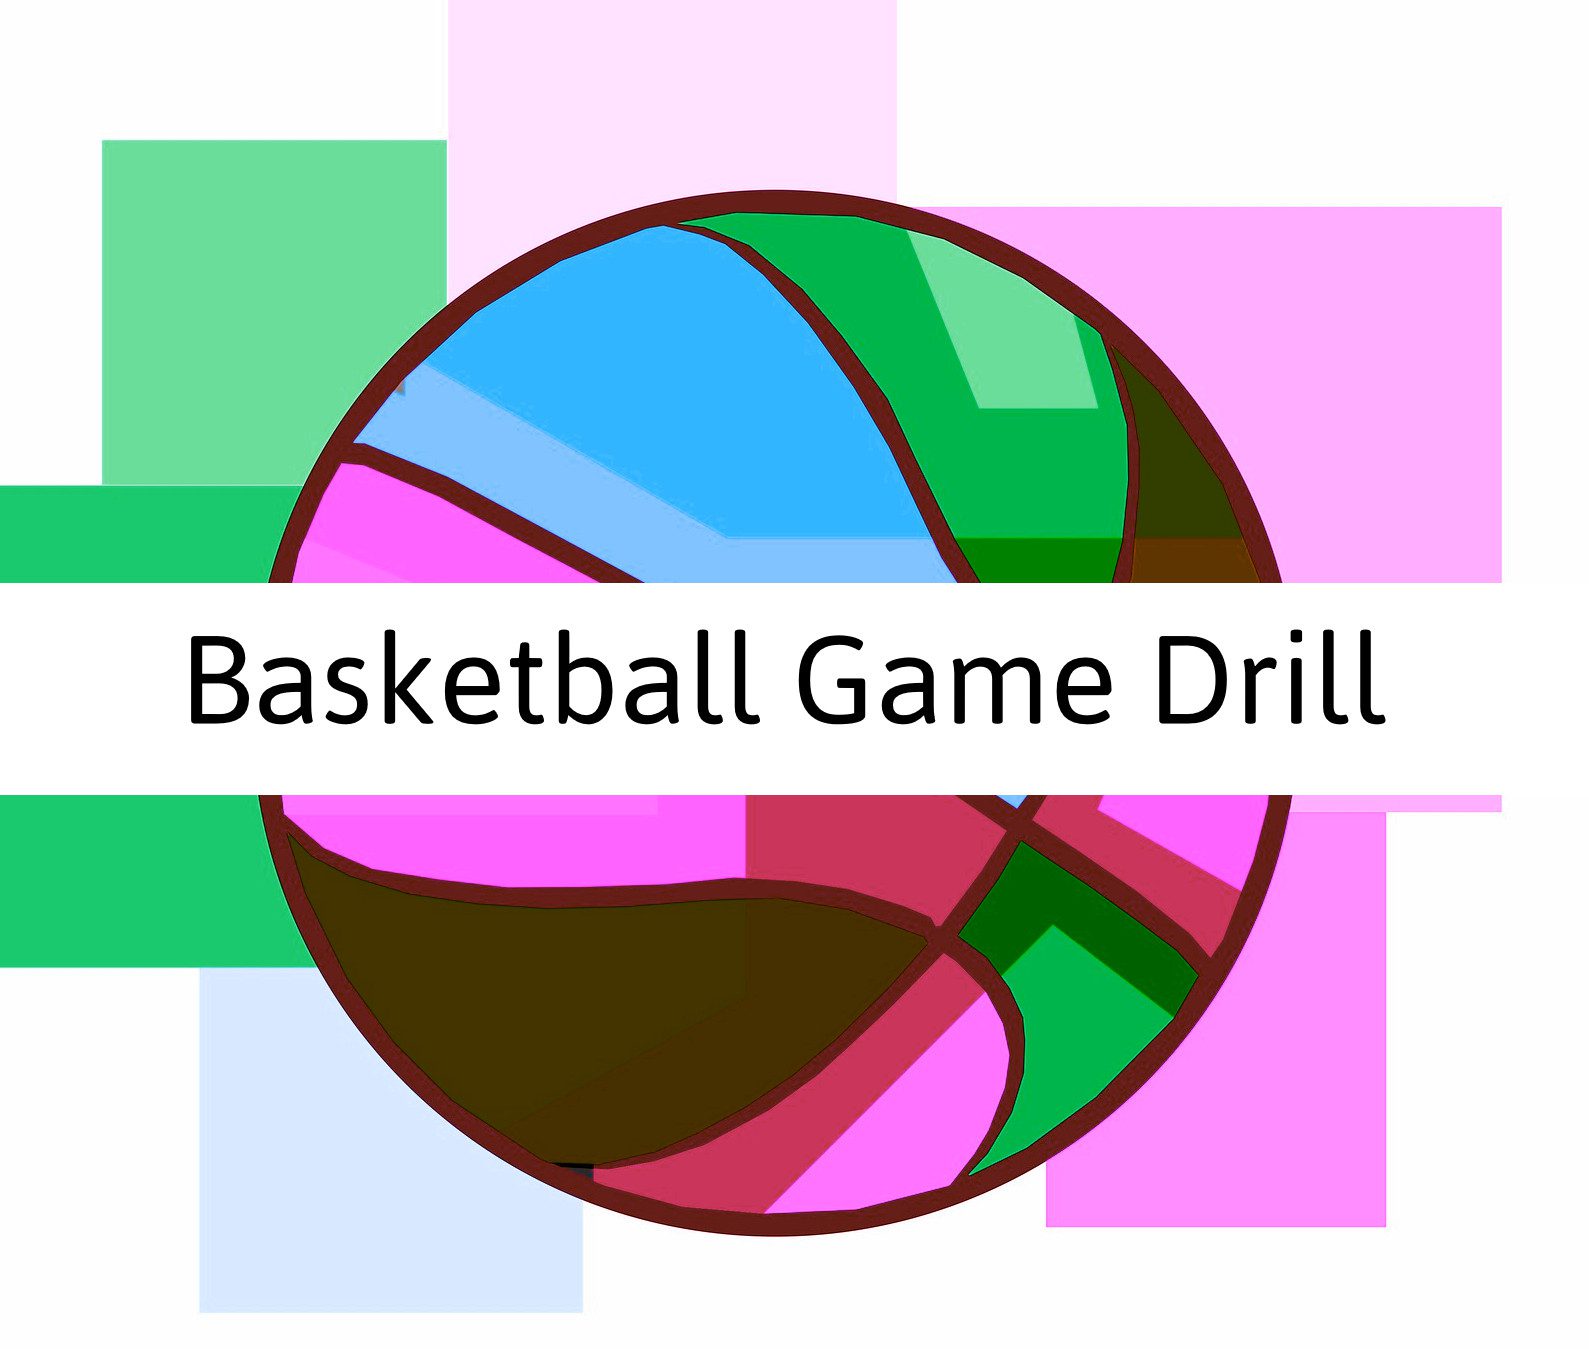 Number Wars 1 vs 1 (X vs X) Full-Court Game Basketball Drill